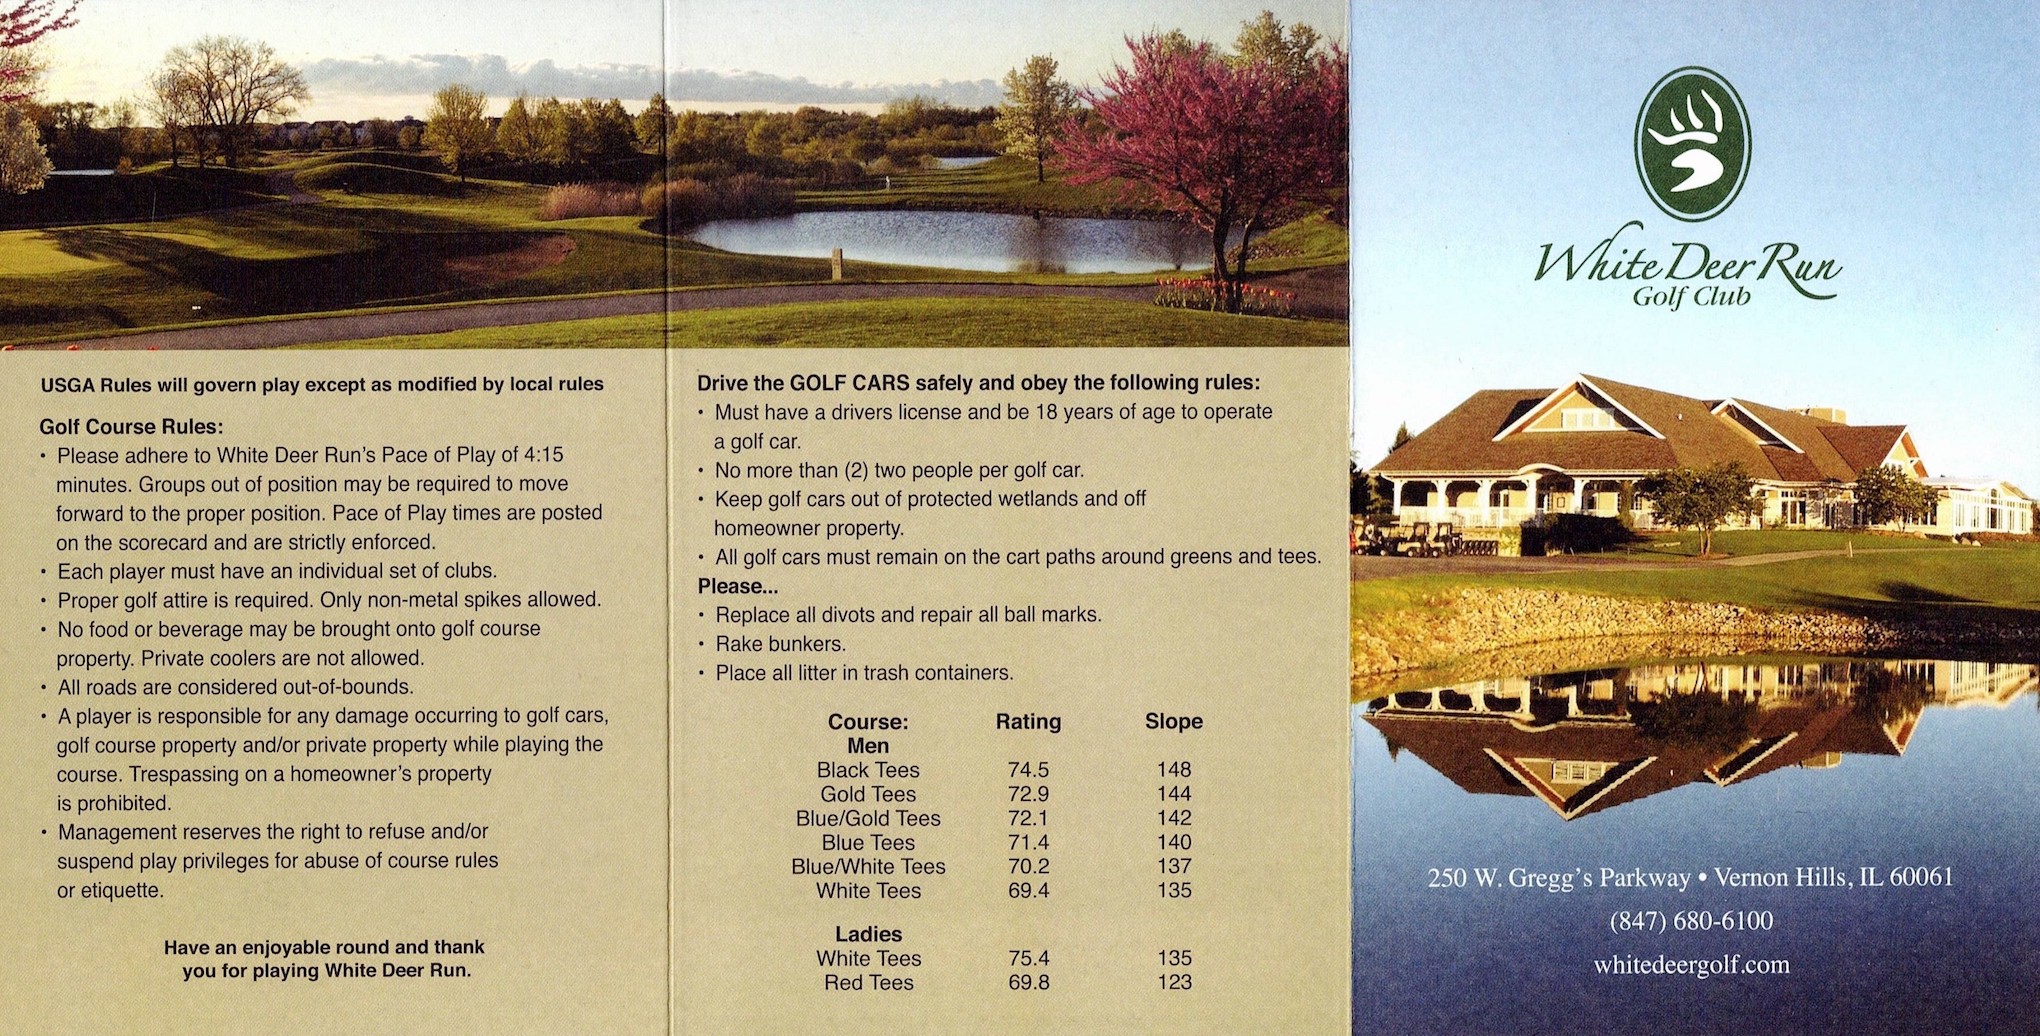 Scan of the scorecard from White Deer Run Golf Club in Vernon Hills, Illinois. 